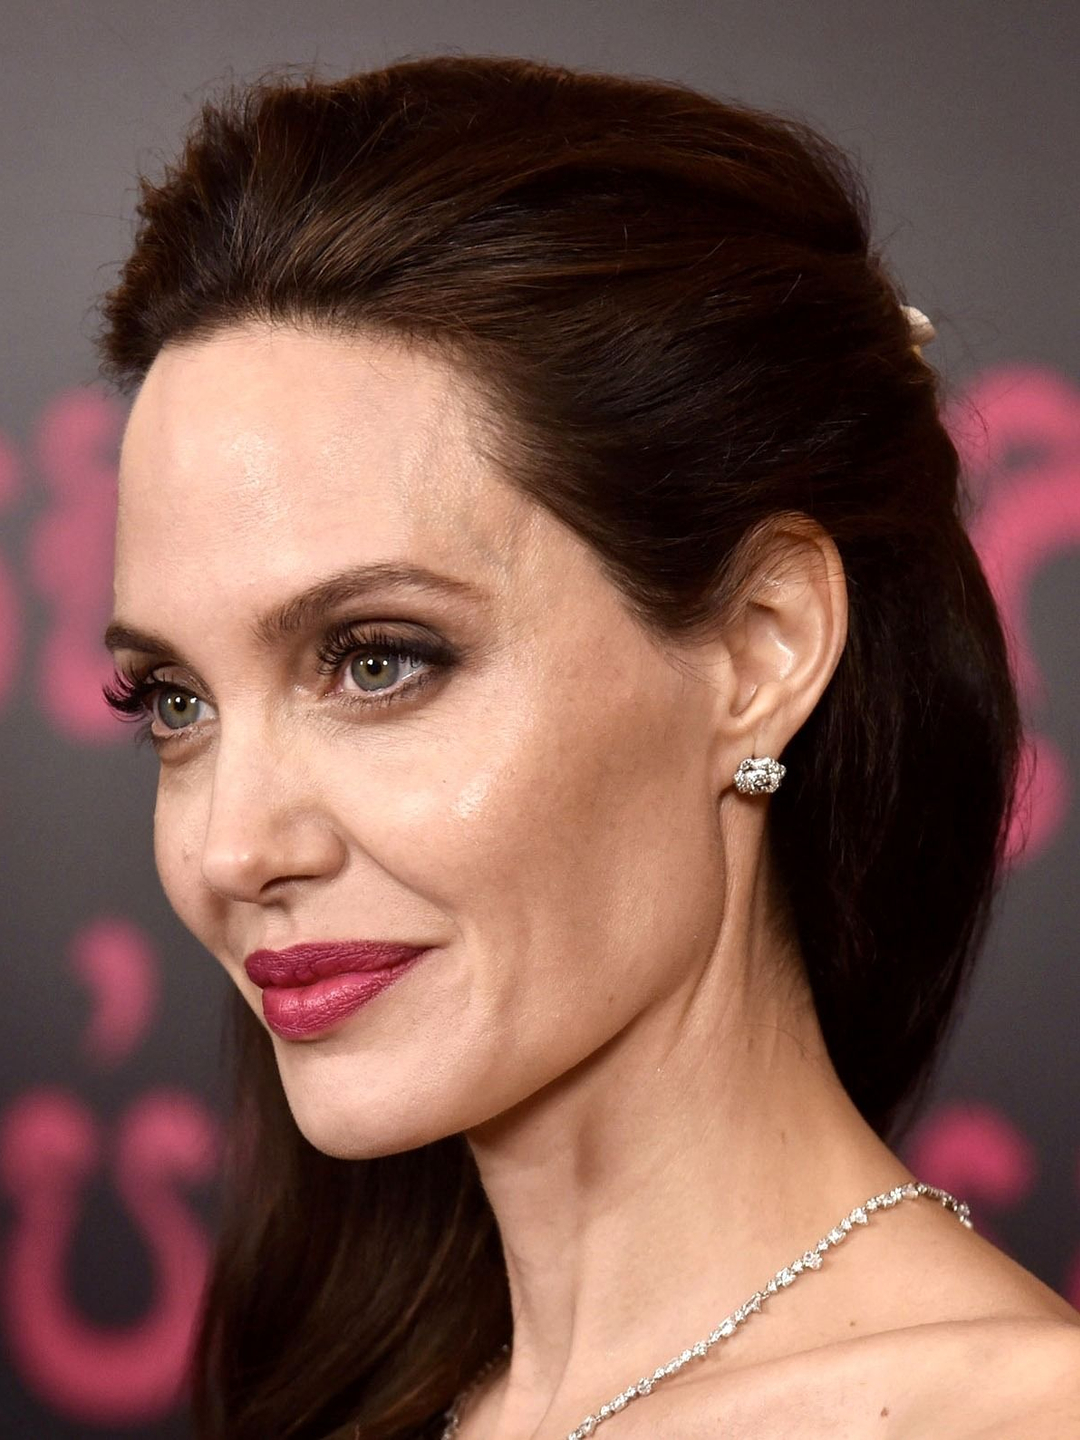 Angelina Jolie dating history